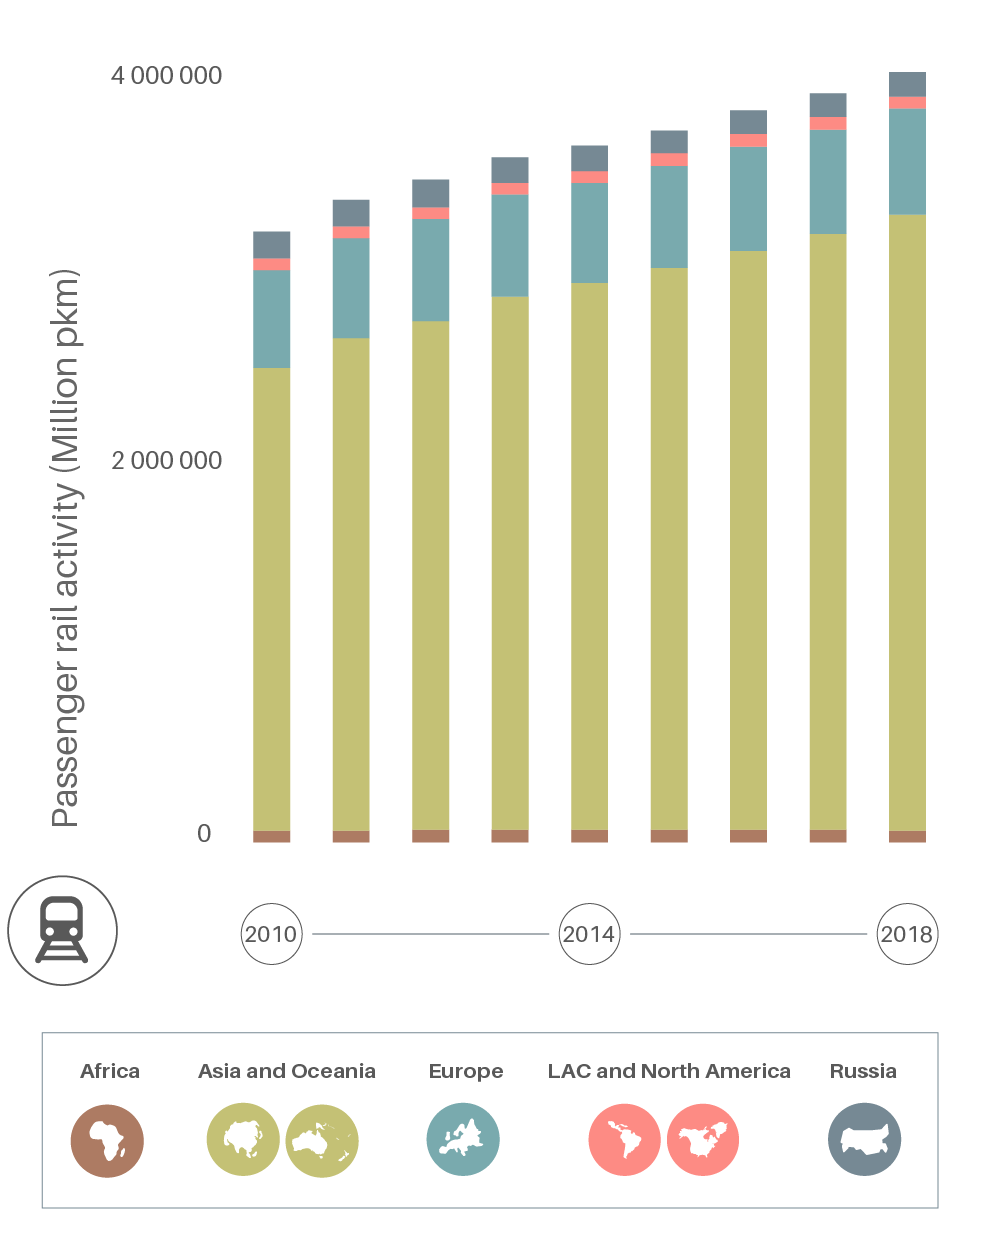 Passenger rail activity by region, 2010-2018